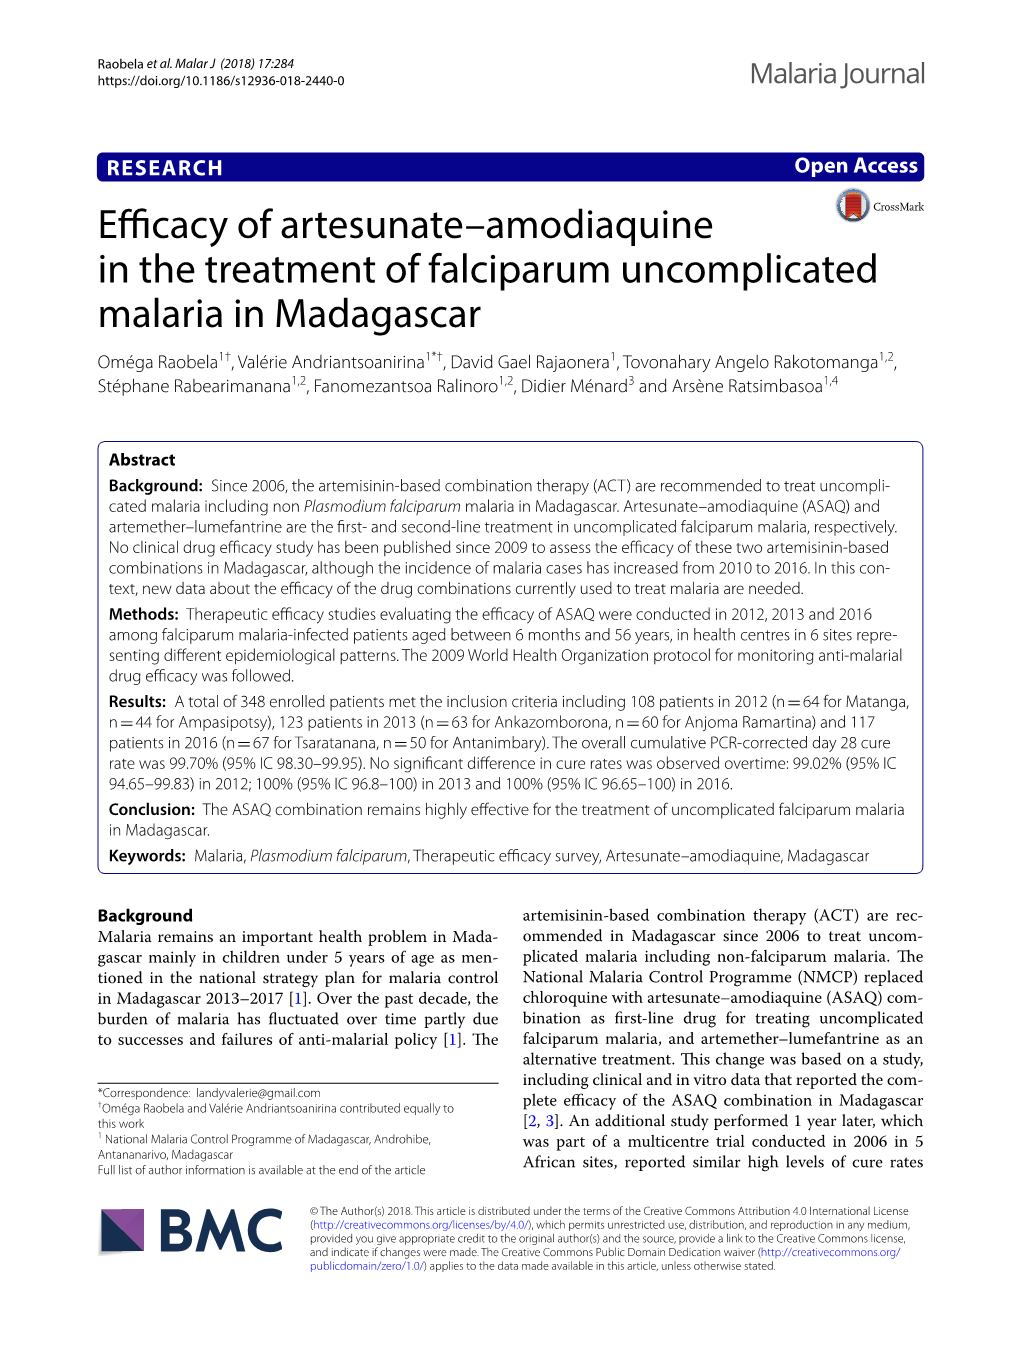 Efficacy of Artesunate–Amodiaquine in the Treatment of Falciparum